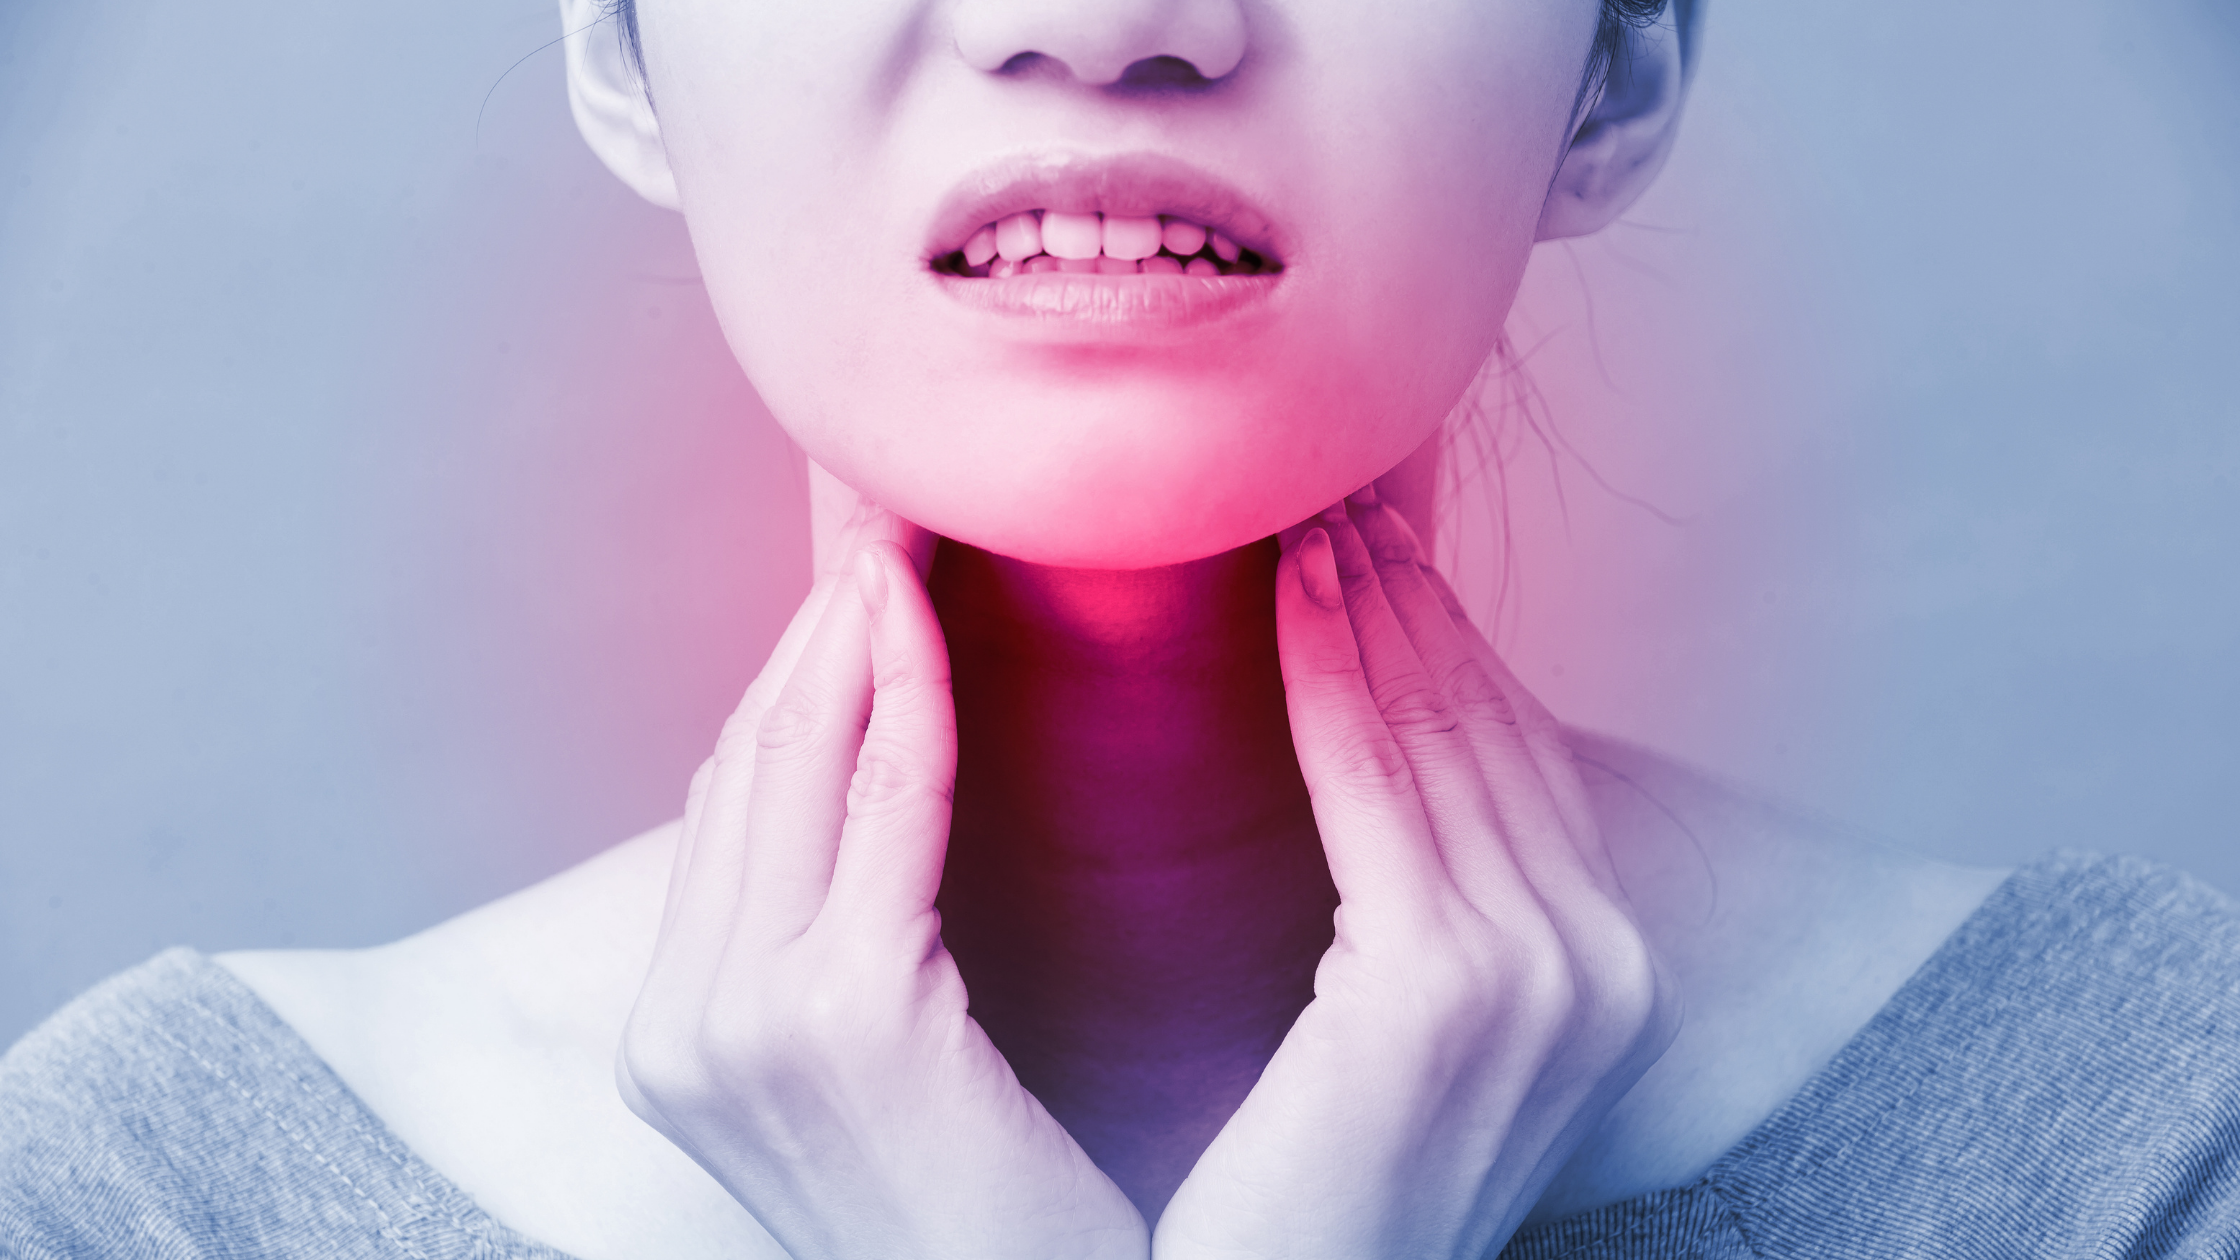 Woman massages throat in discomfort